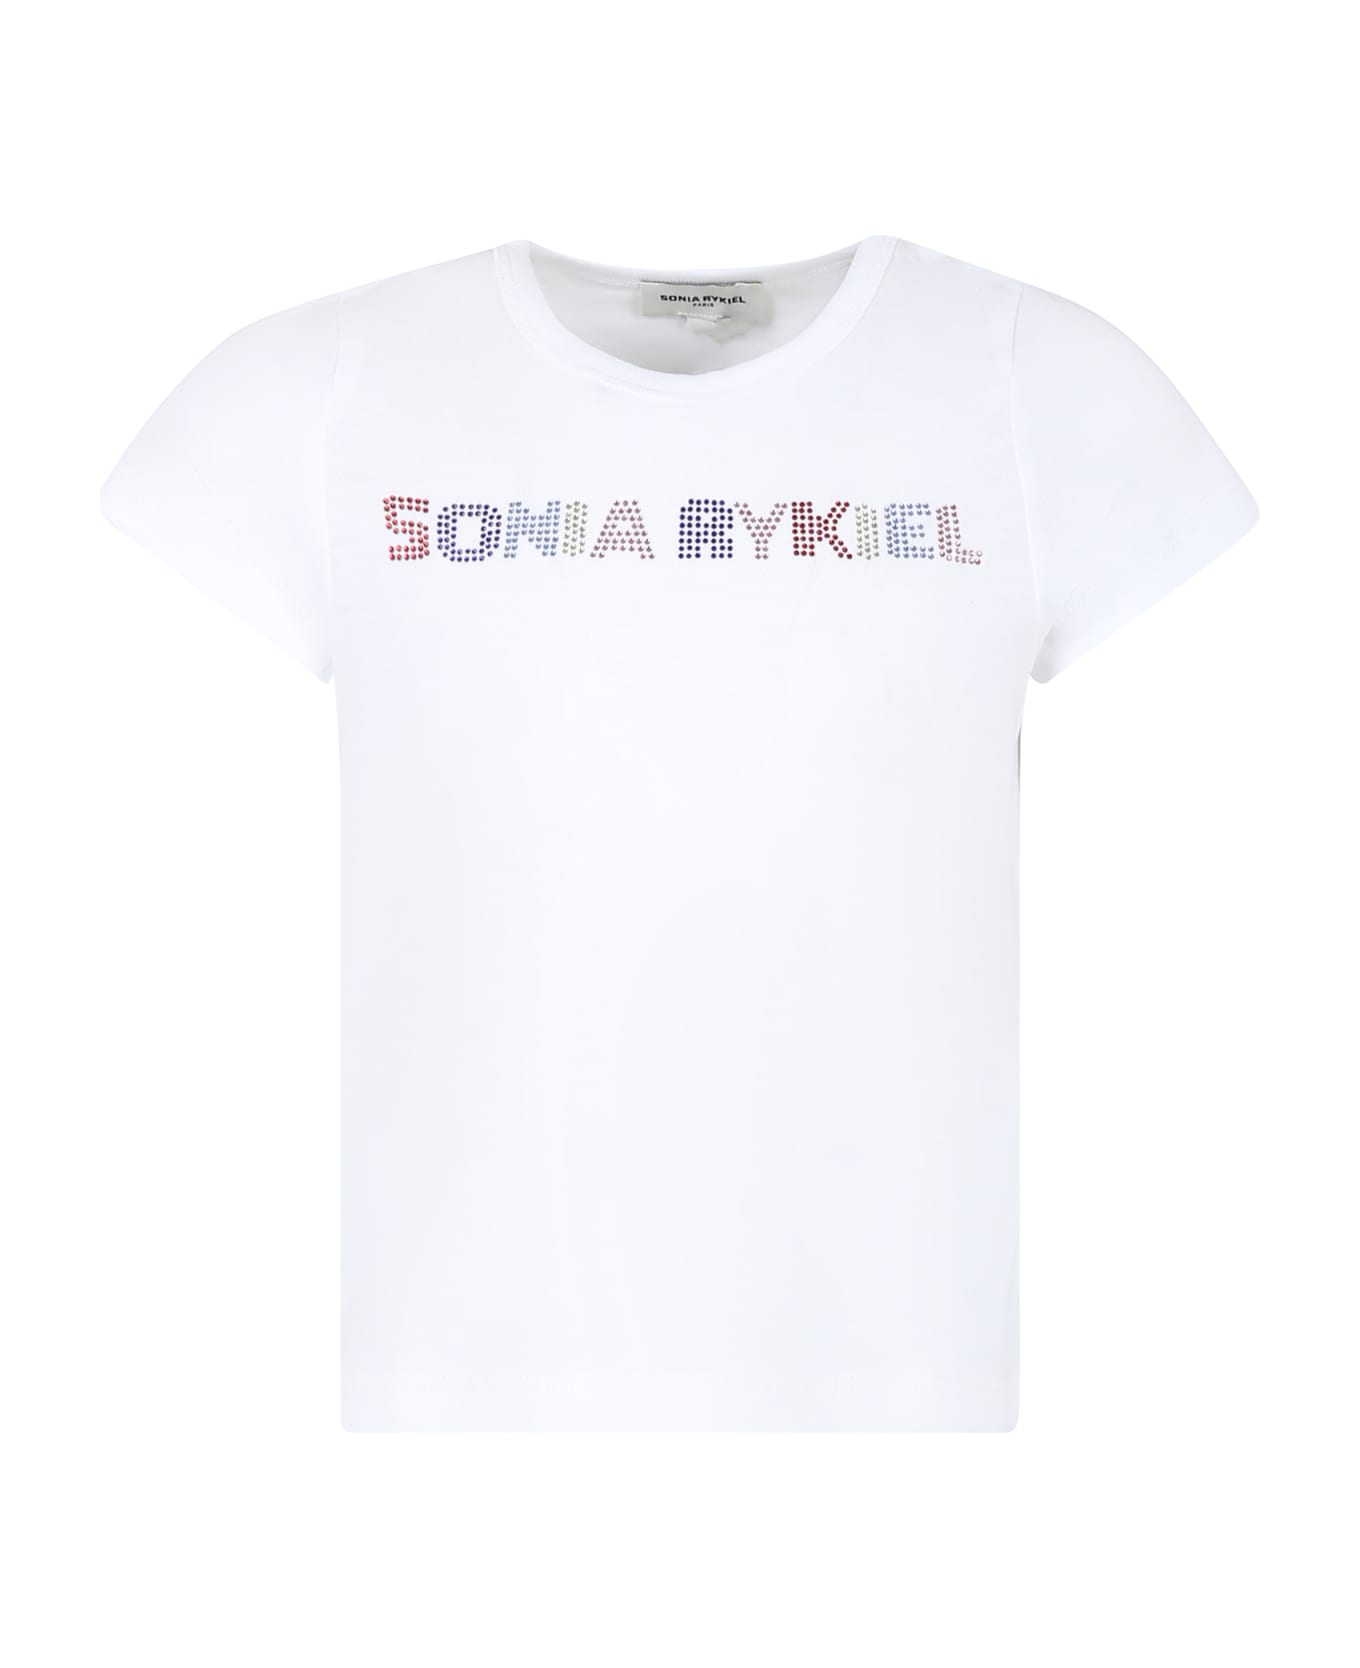 Rykiel Enfant White T-shirt For Girl With Logo And Rhinestone - White